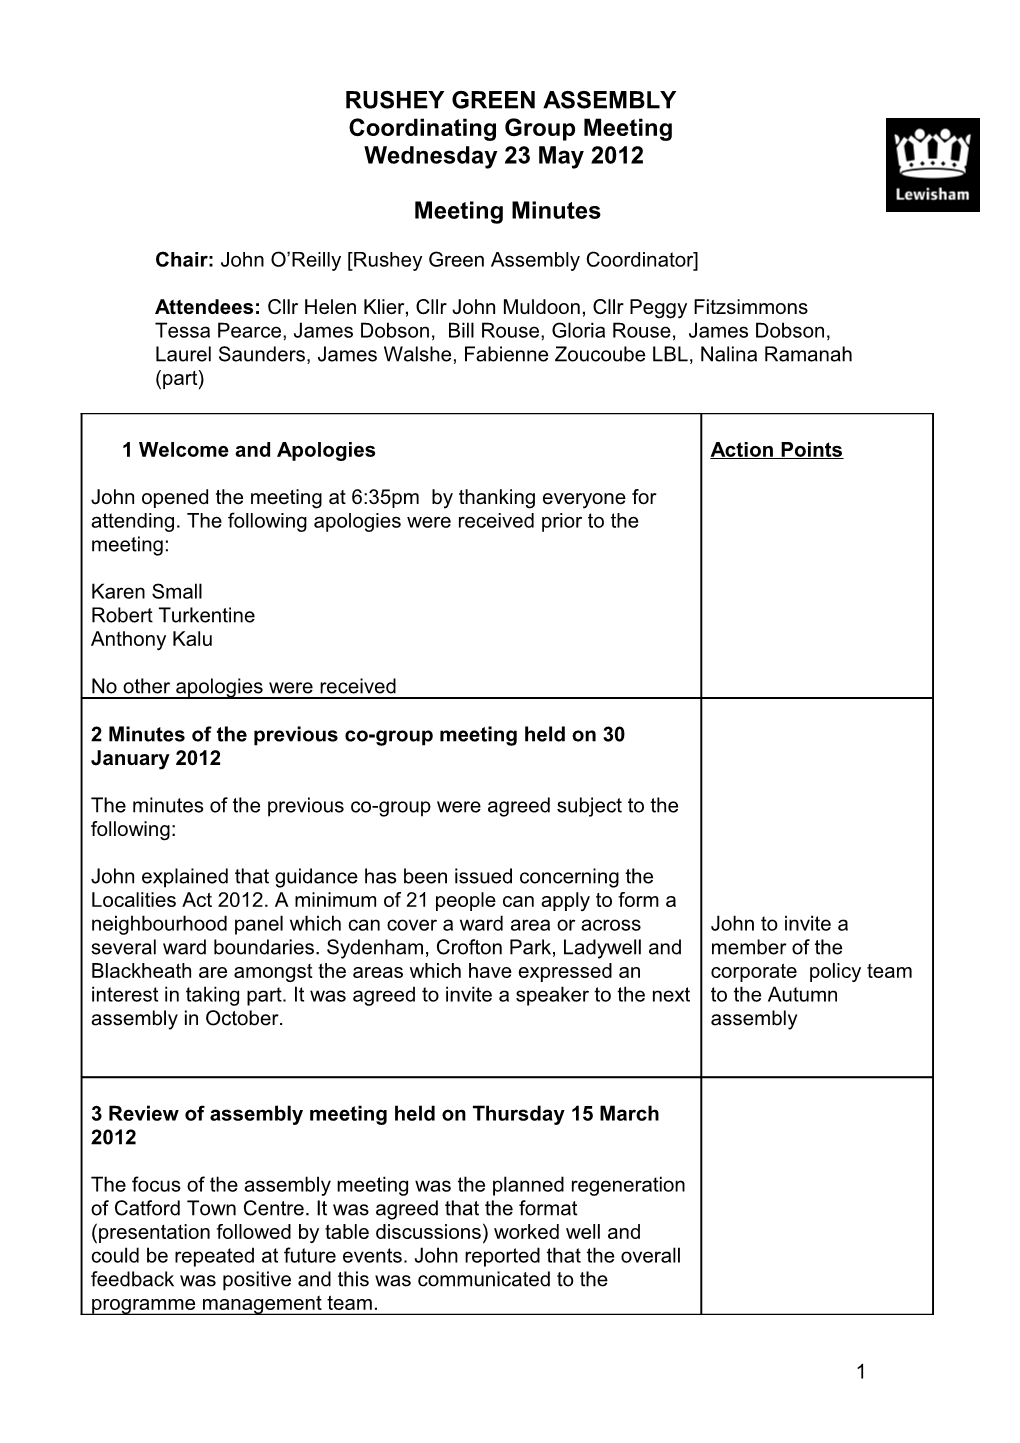 Rushey Green Coordinating Group Meeting 23 May 2012 Minutes